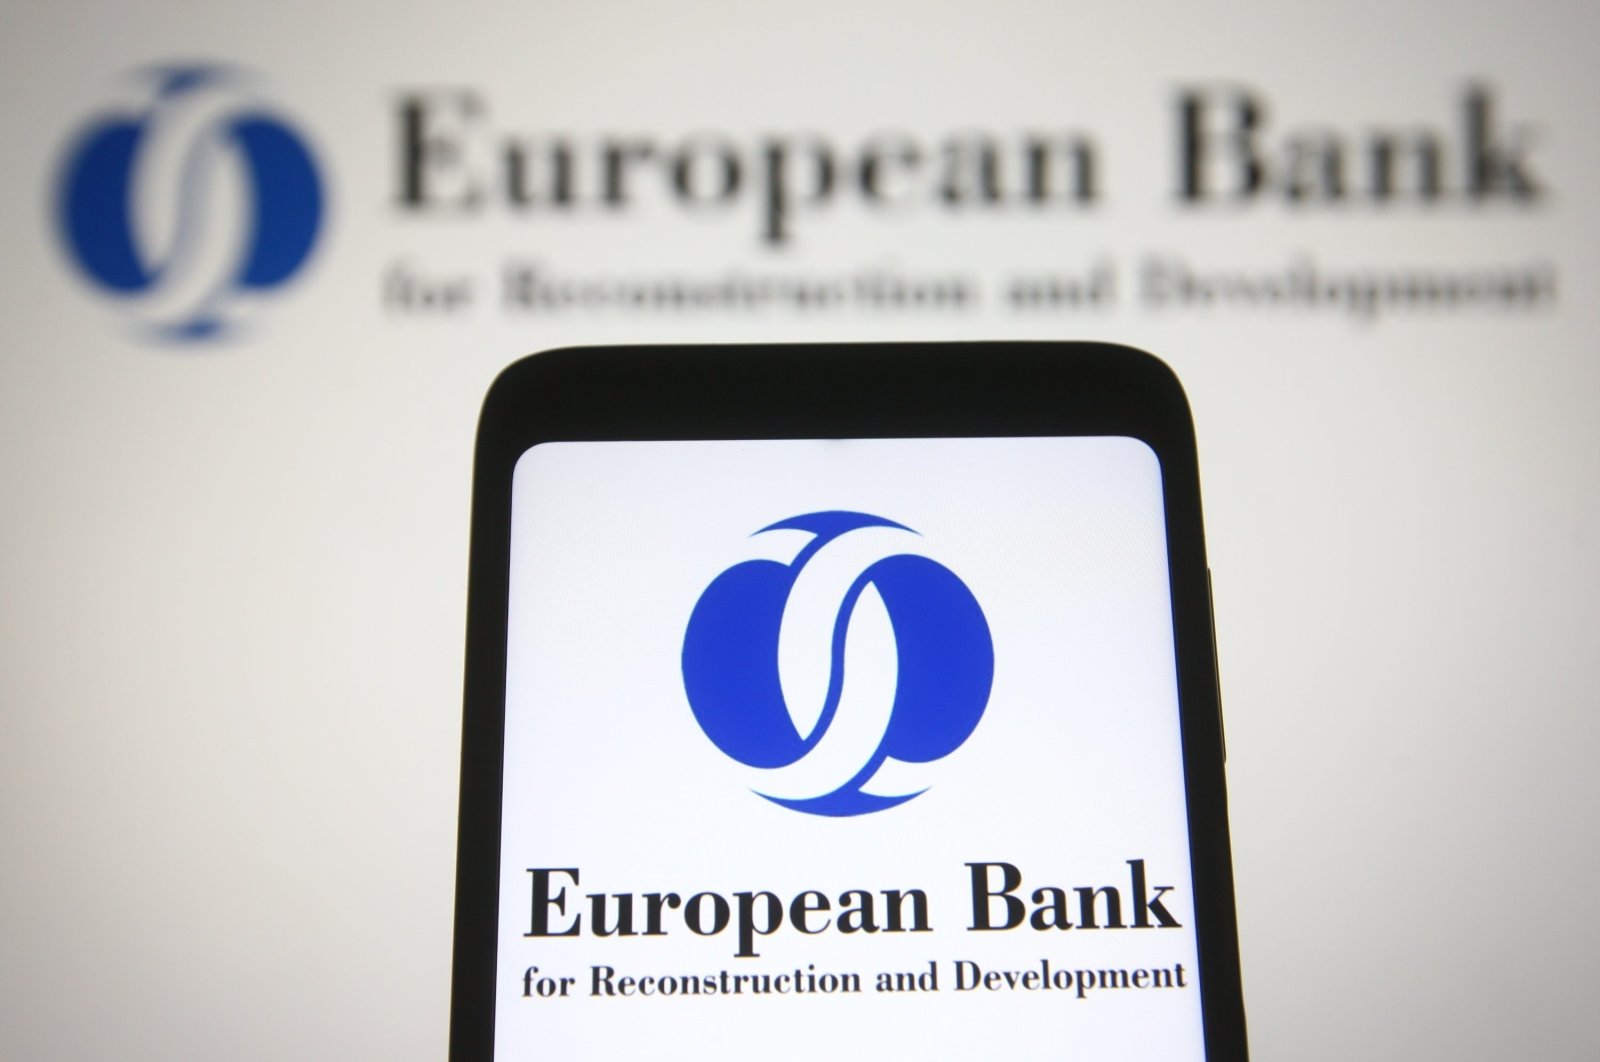 The European Bank for Reconstruction and Development (EBRD) logo is seen on a mobile phone screen, Kyiv, Ukraine, Nov. 4, 2021. (Shutterstock Photo)